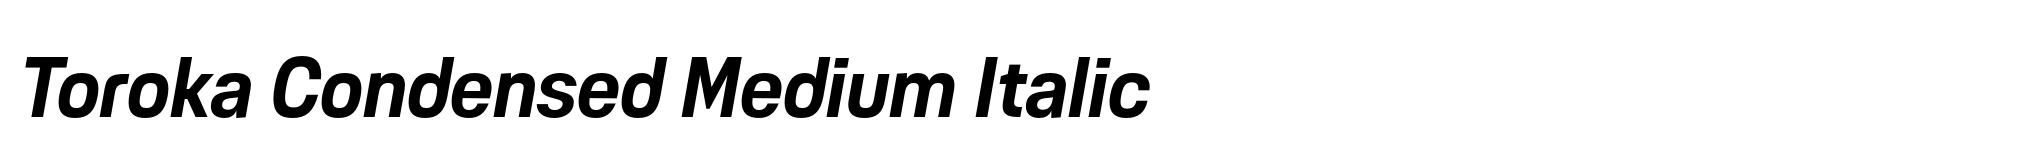 Toroka Condensed Medium Italic image